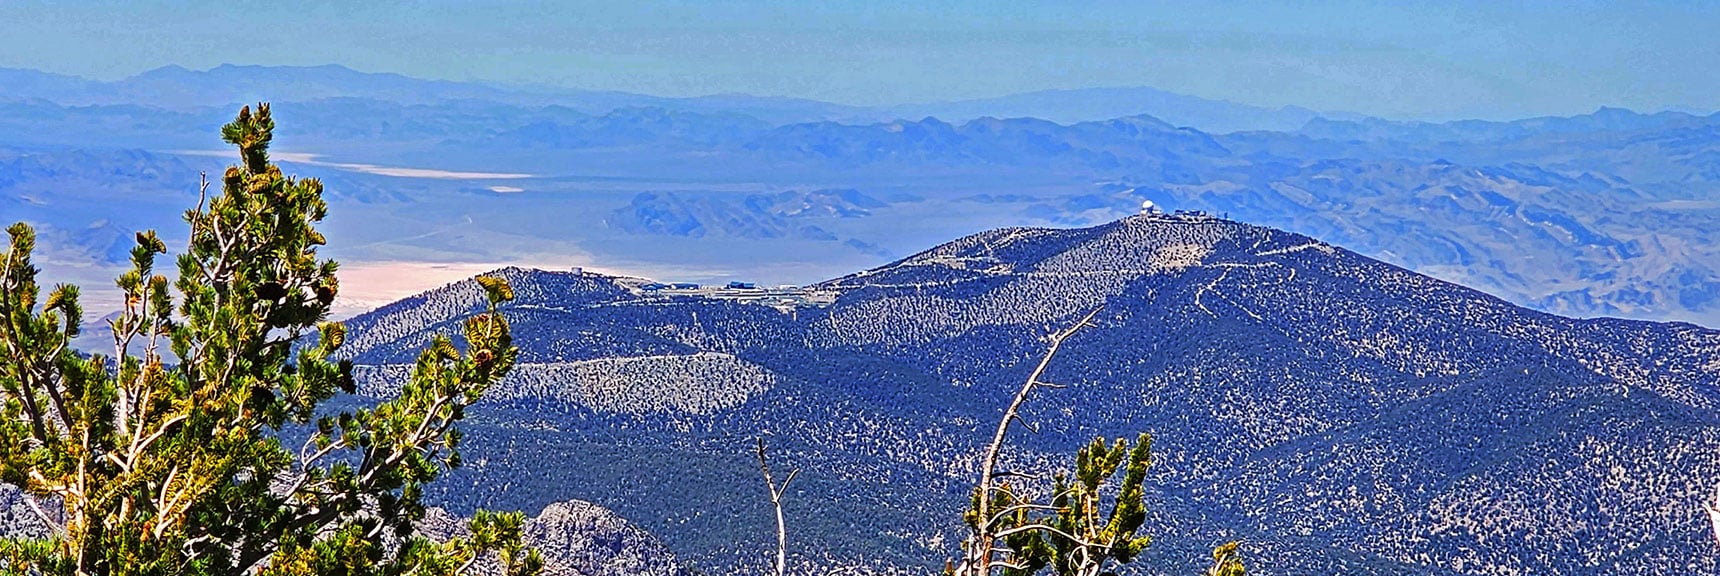 Angel Peak: USAF Radar (Right), Spring Mts. Youth Center (Left). | Fletcher Canyon to Harris Mountain Summit | Mt Charleston Wilderness, Nevada